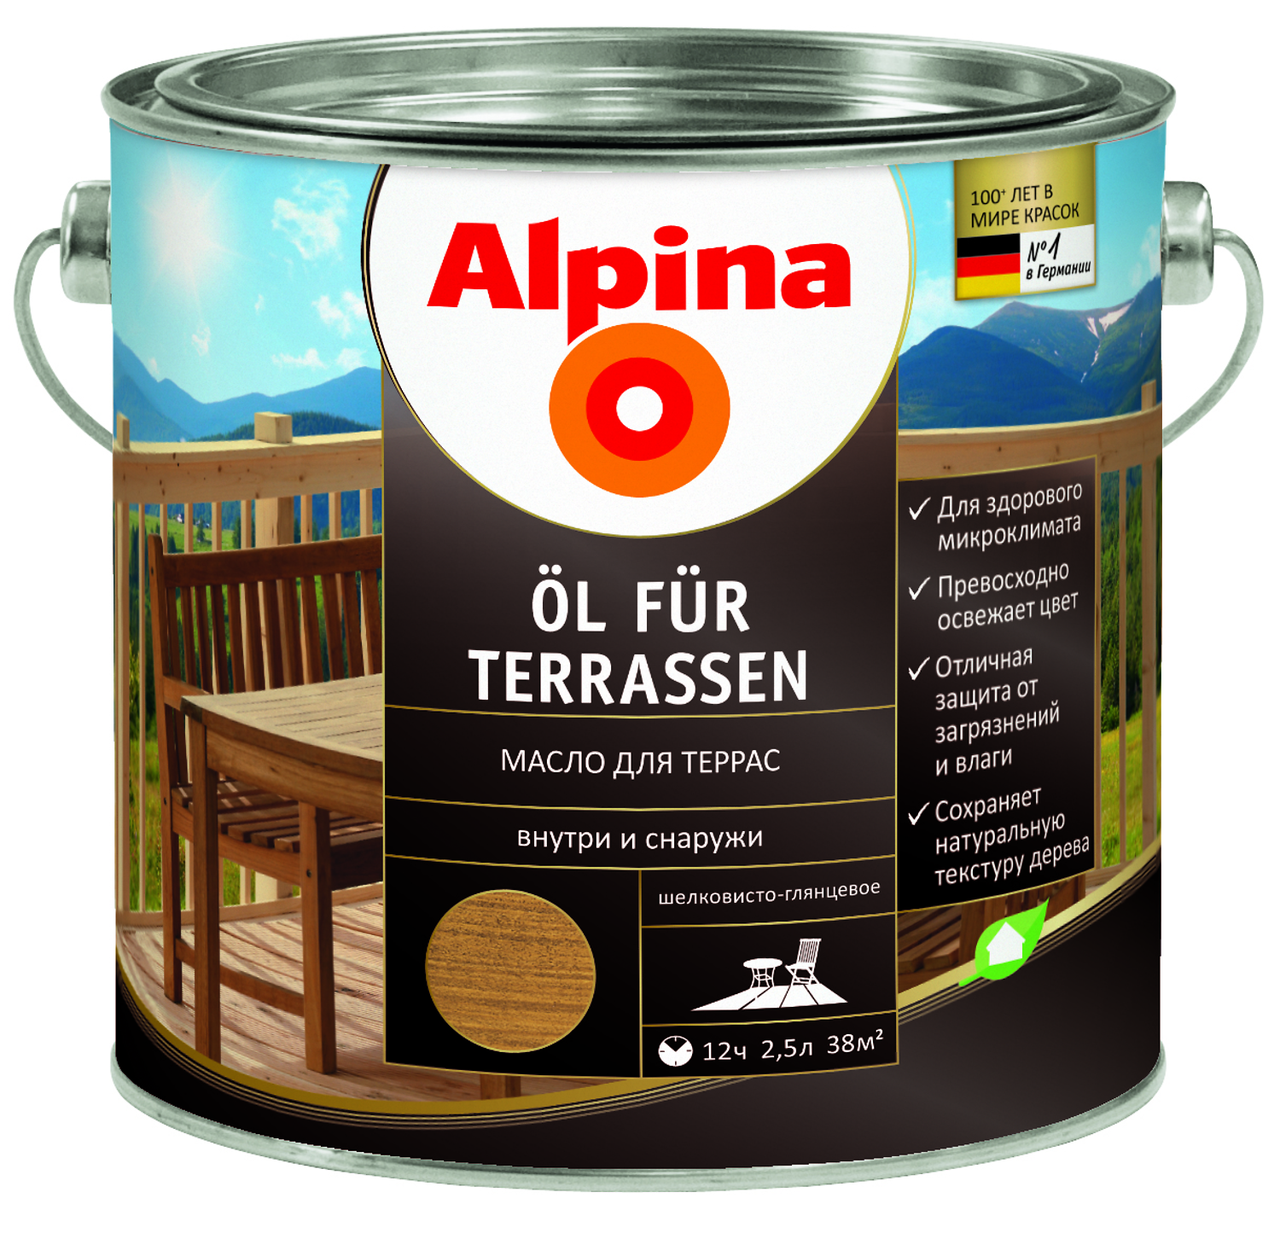 Масло для террас (Alpina Öl für Terrassen) Прозрачный 750 мл.